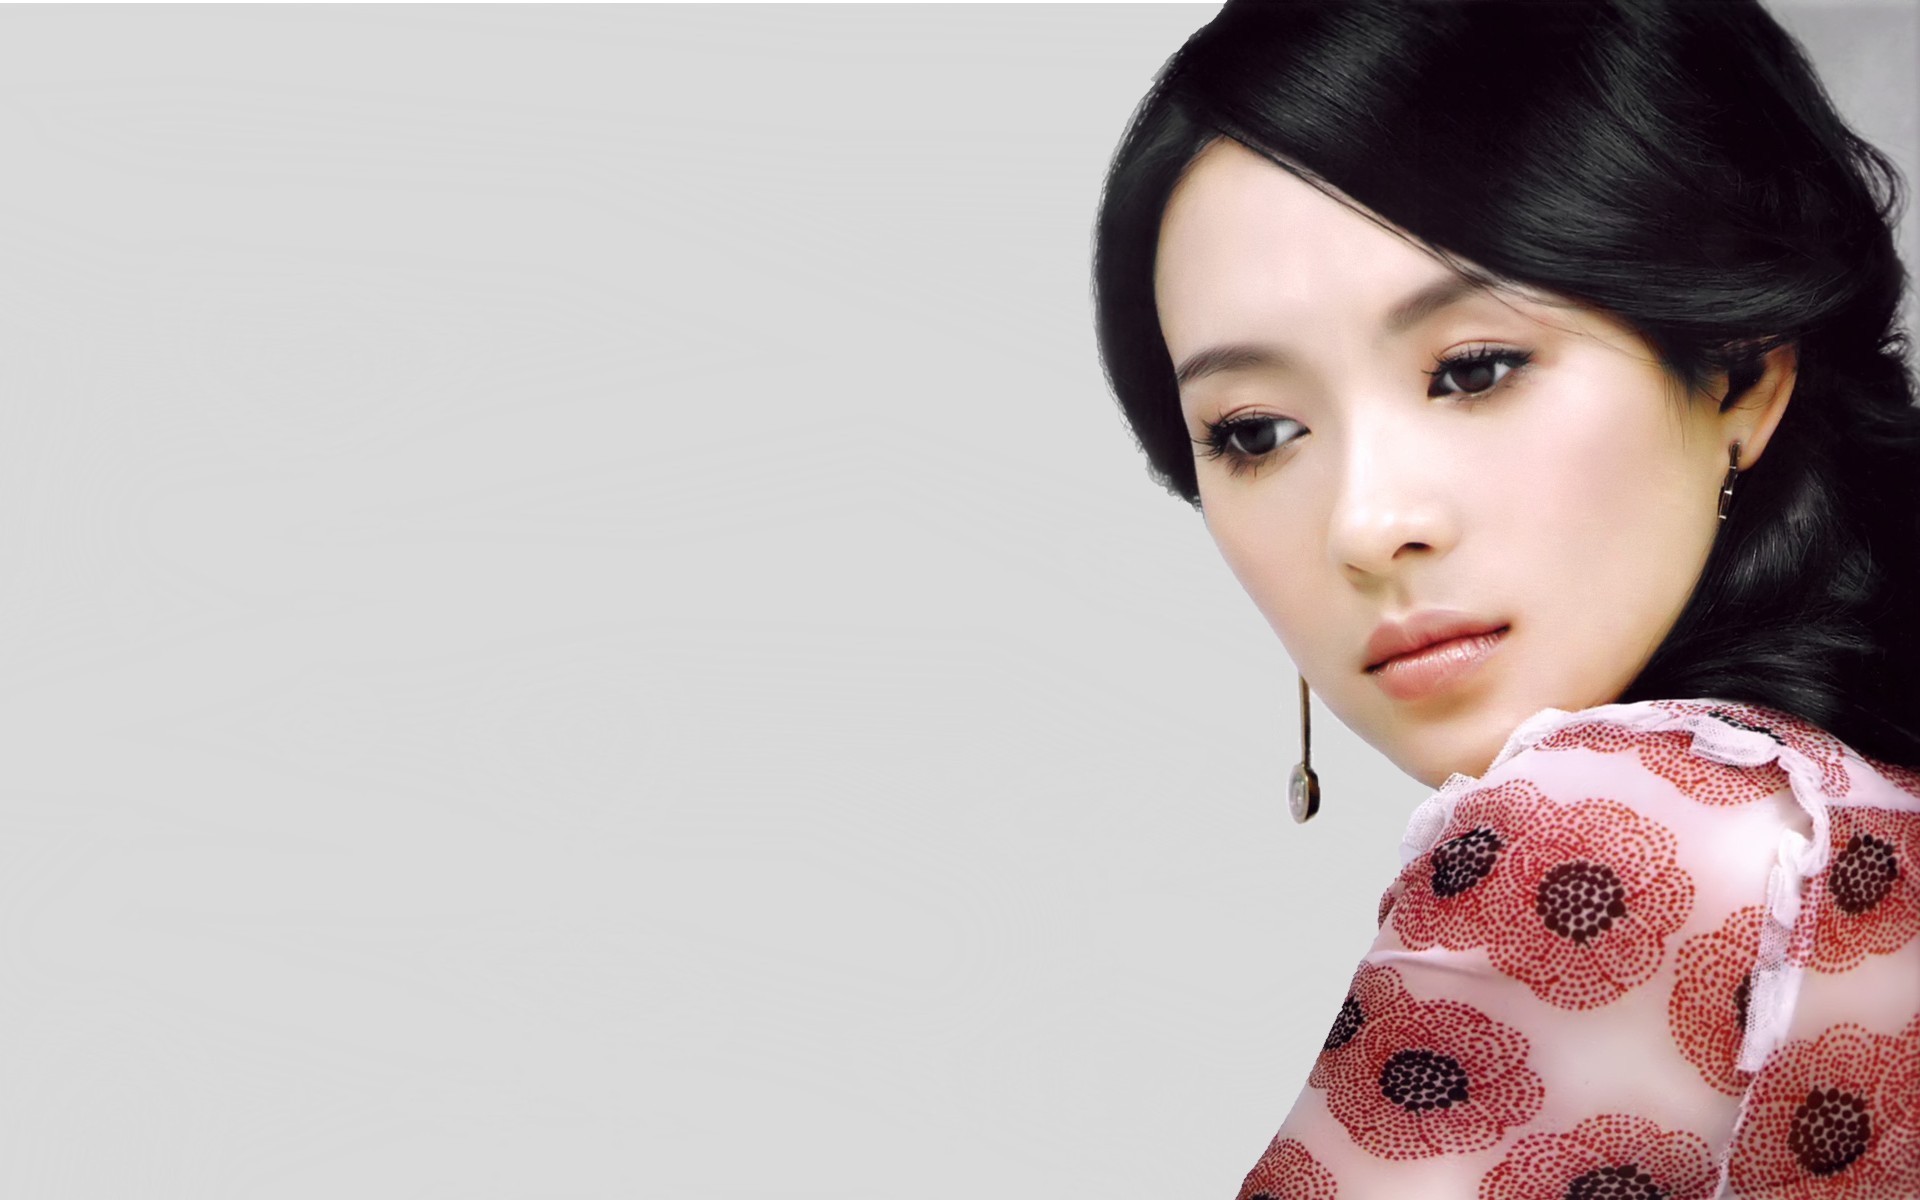 People 1920x1200 actress Asian Zhang Ziyi black hair earring dark eyes face portrait simple background white background looking away women